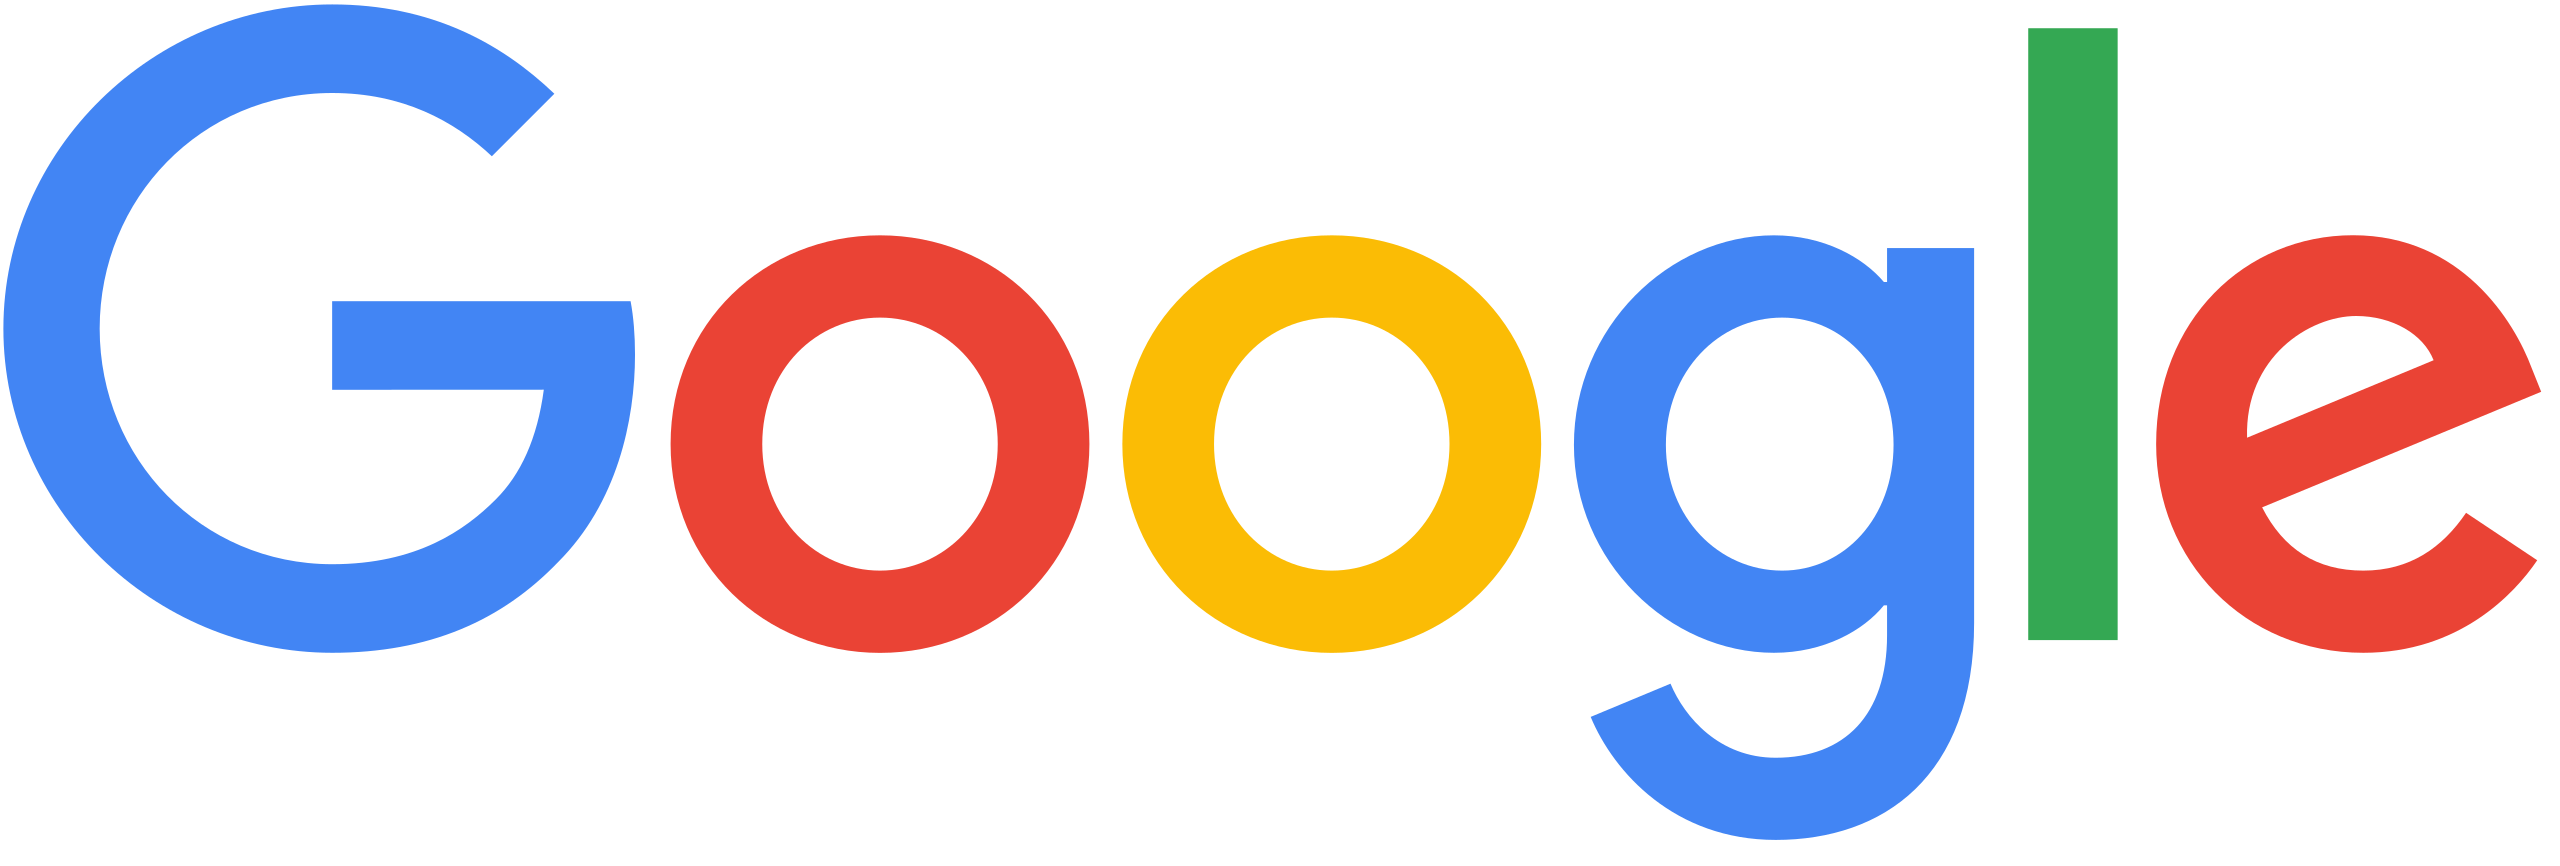 Google Logo Top Maui Snorkel Boat